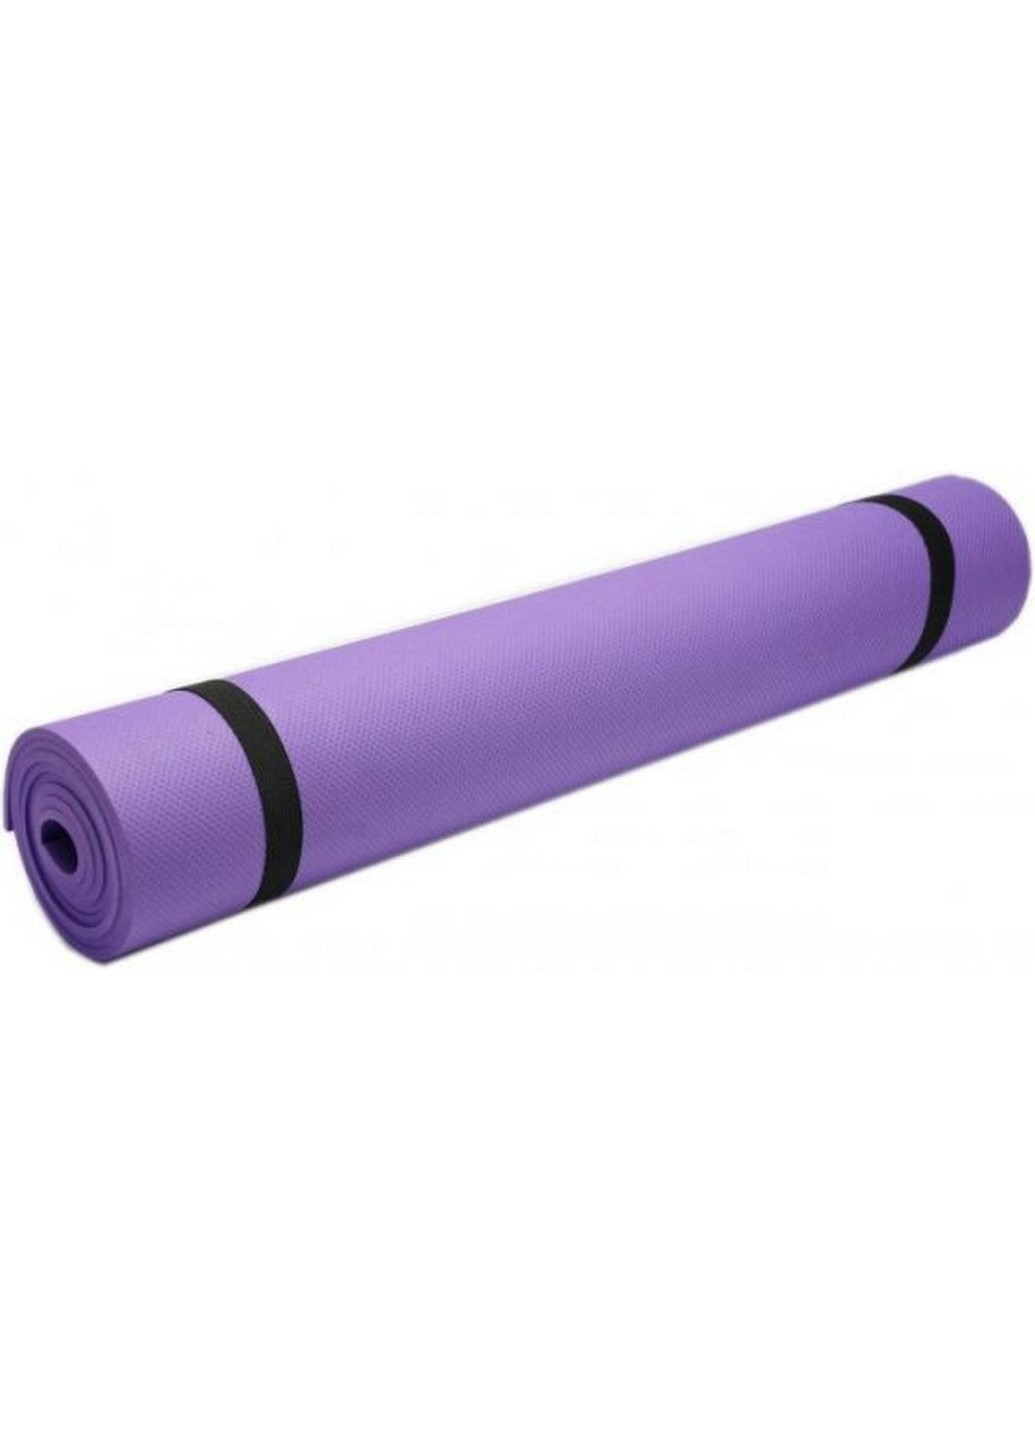 Йогамат M 0380-2 73х61 см, толщина 5 мм (Фиолетовый) Profi (237823616)